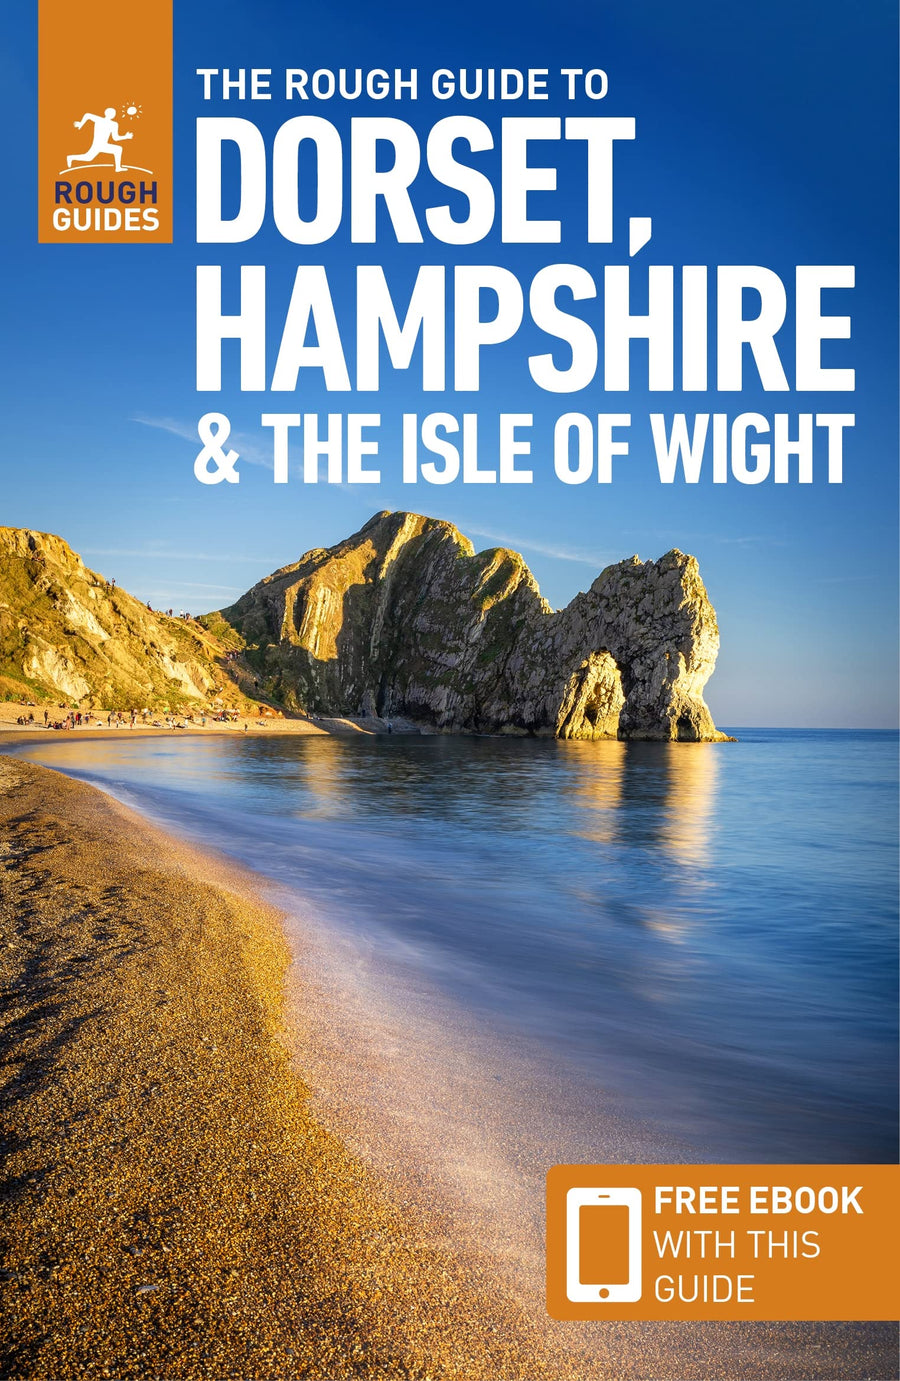 Guide de voyage (en anglais) - Dorset, Hampshire & Isle of Wight | Rough Guides guide de voyage Rough Guides 